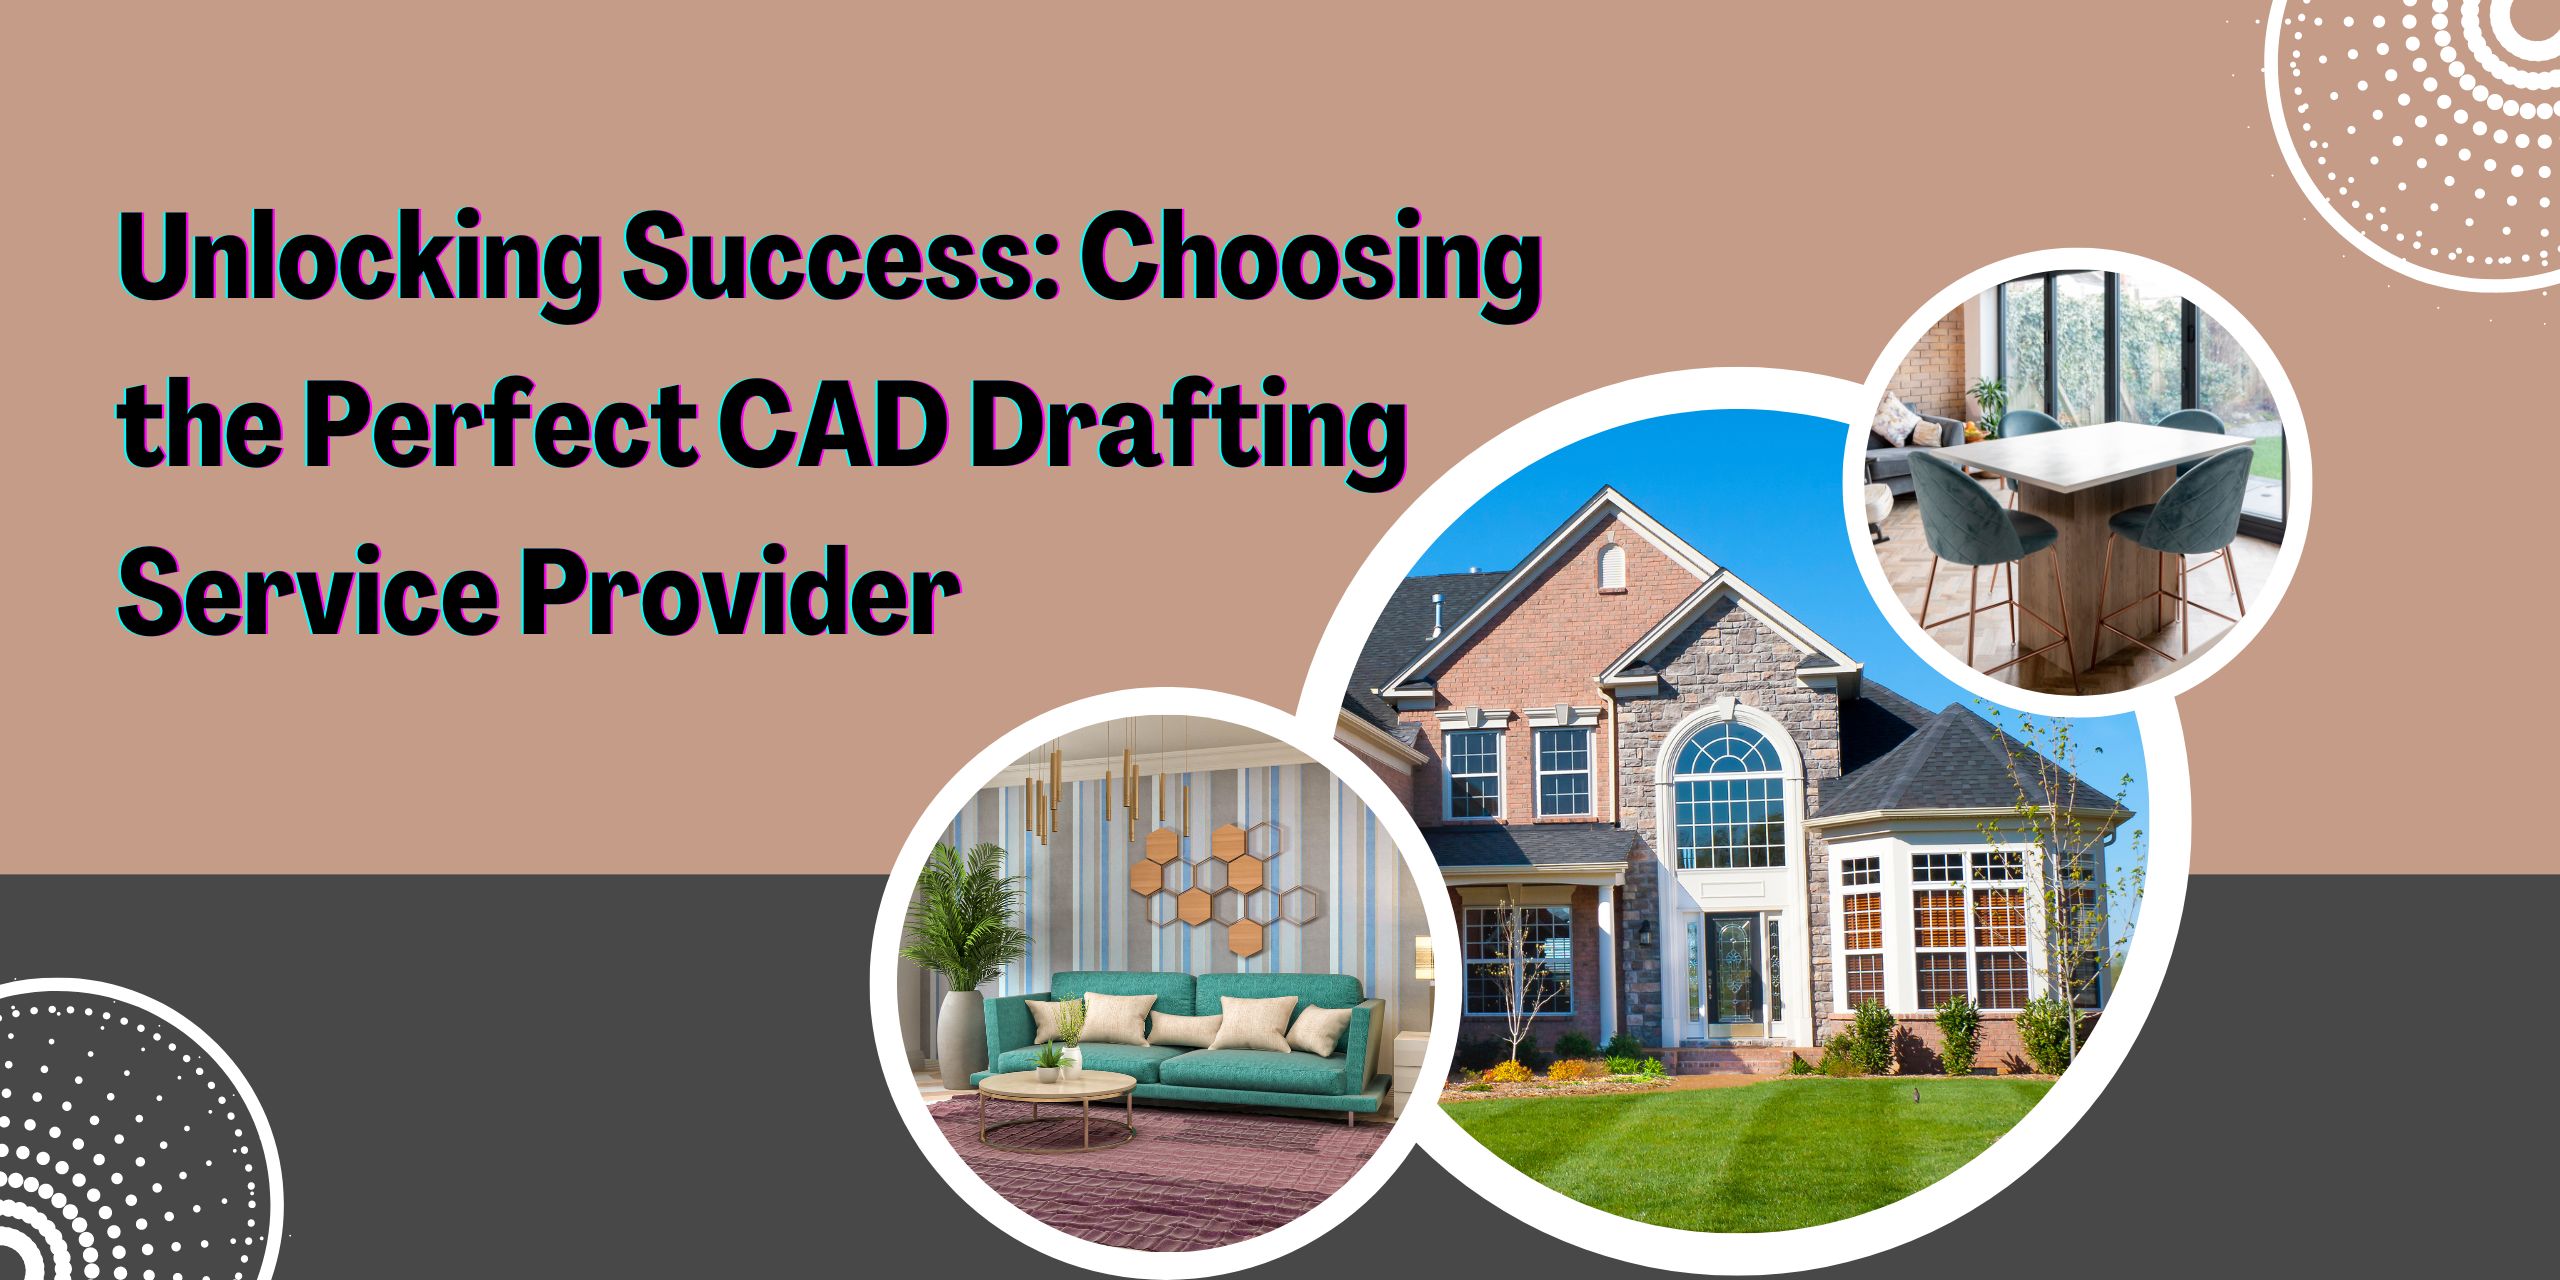 CAD drafting service